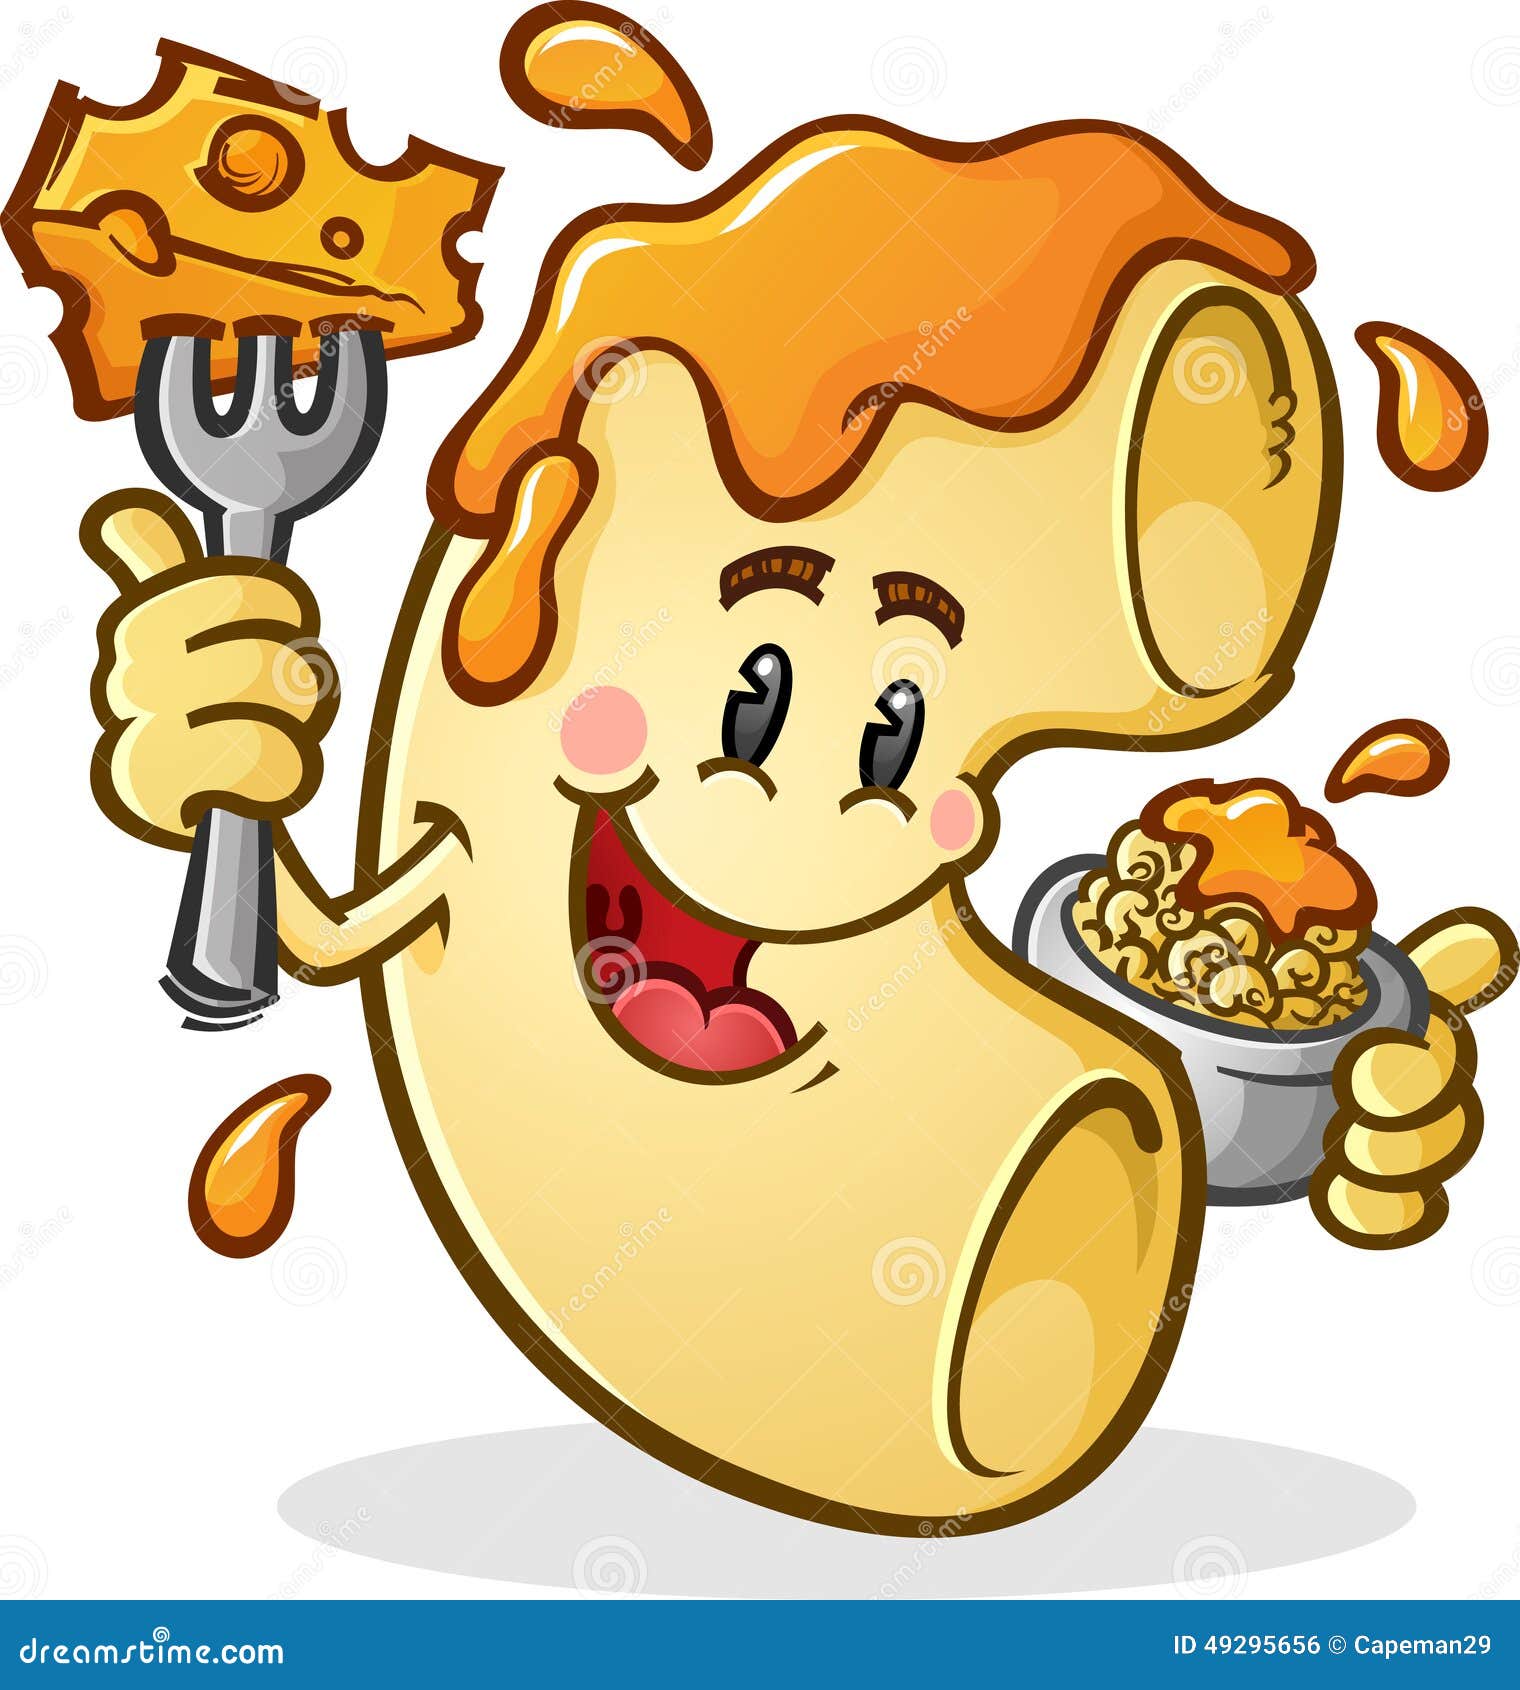 macaroni and cheese cartoon character